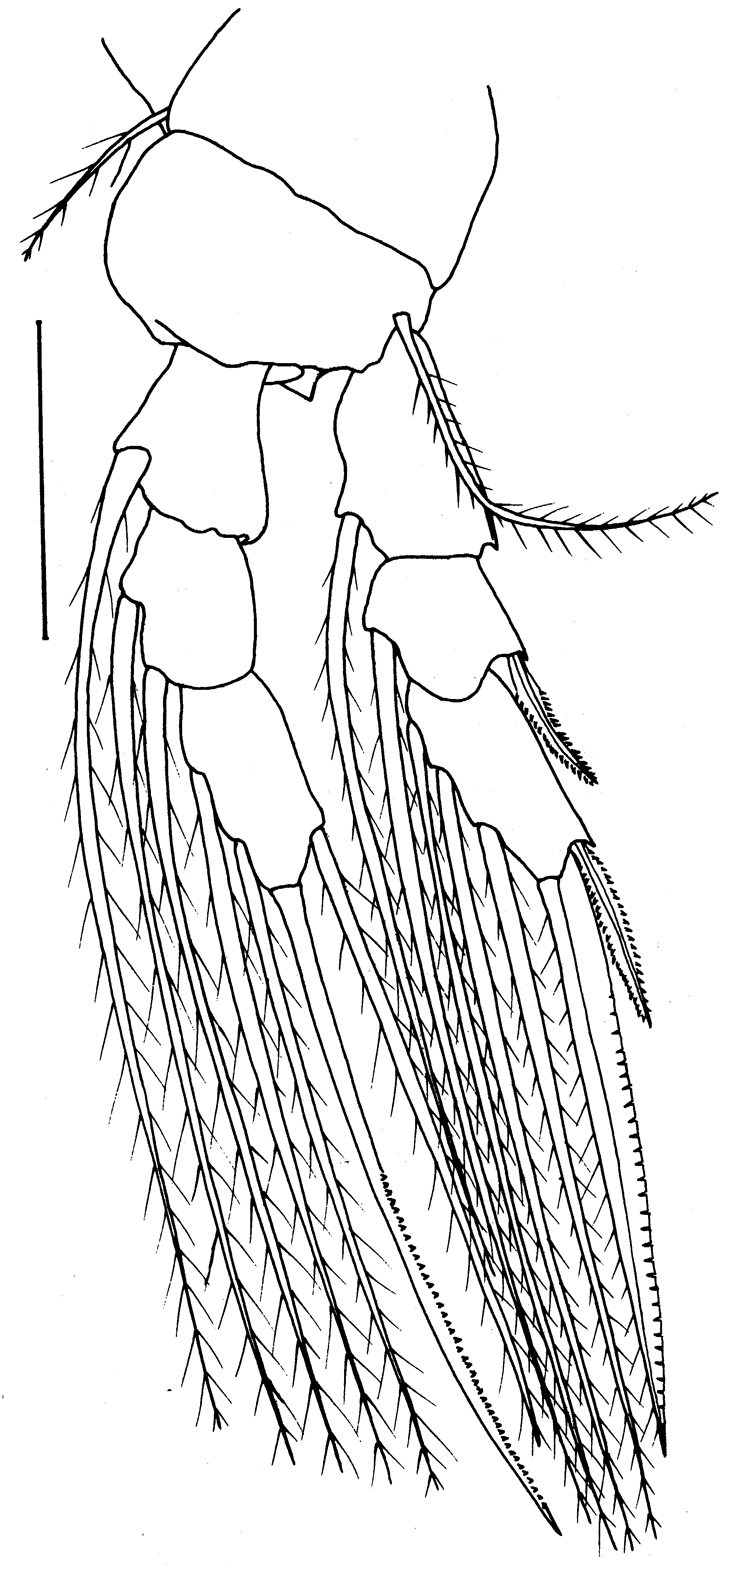 Species Pontoeciella abyssicola - Plate 10 of morphological figures